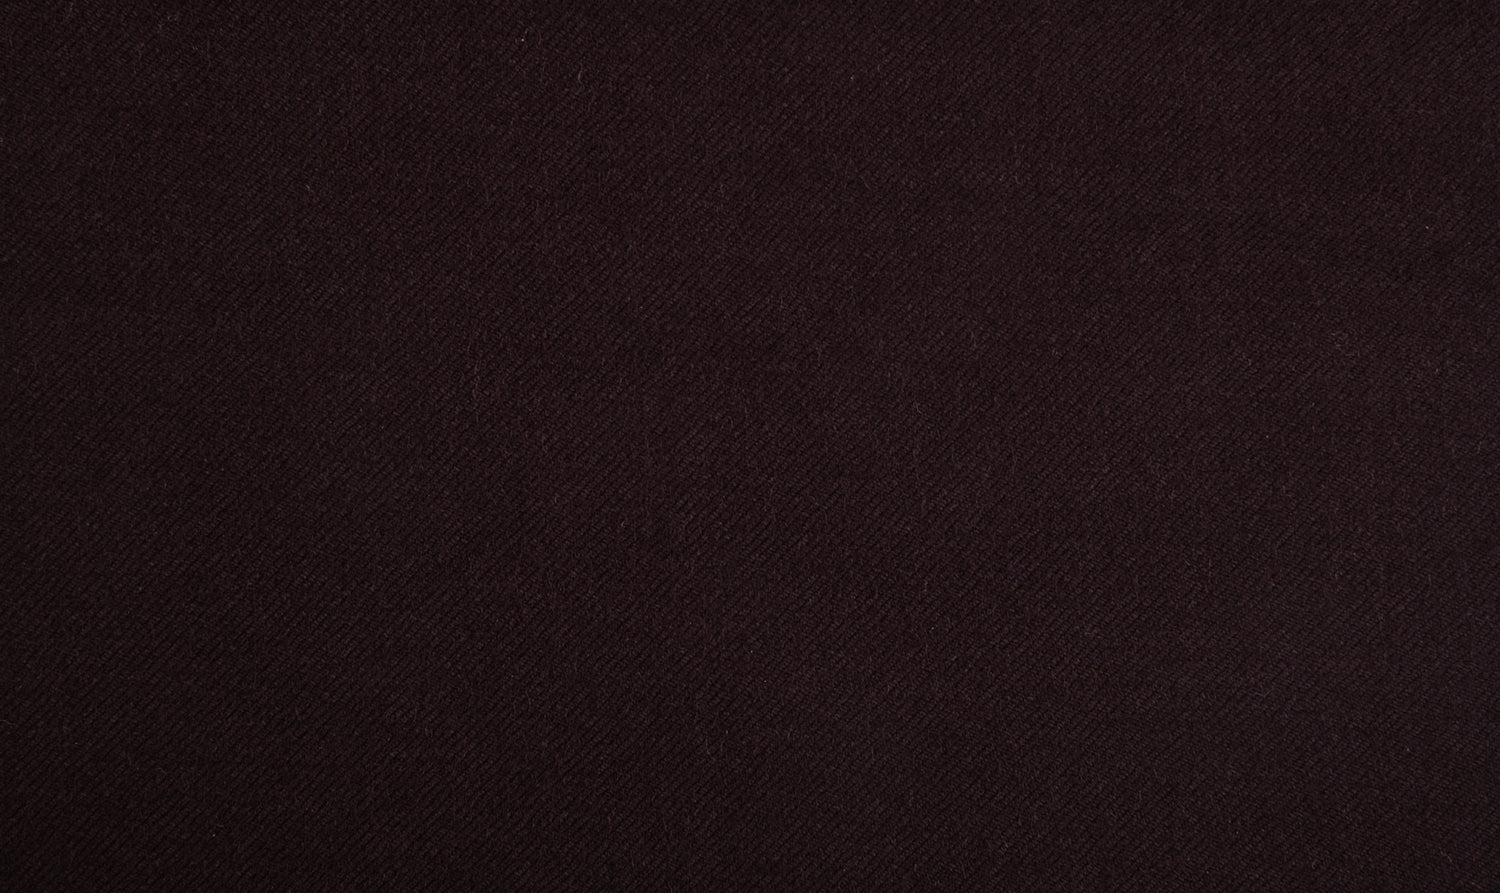 EThomas Wool Cashmere: Chocolate Brown Jacket (7811744264)